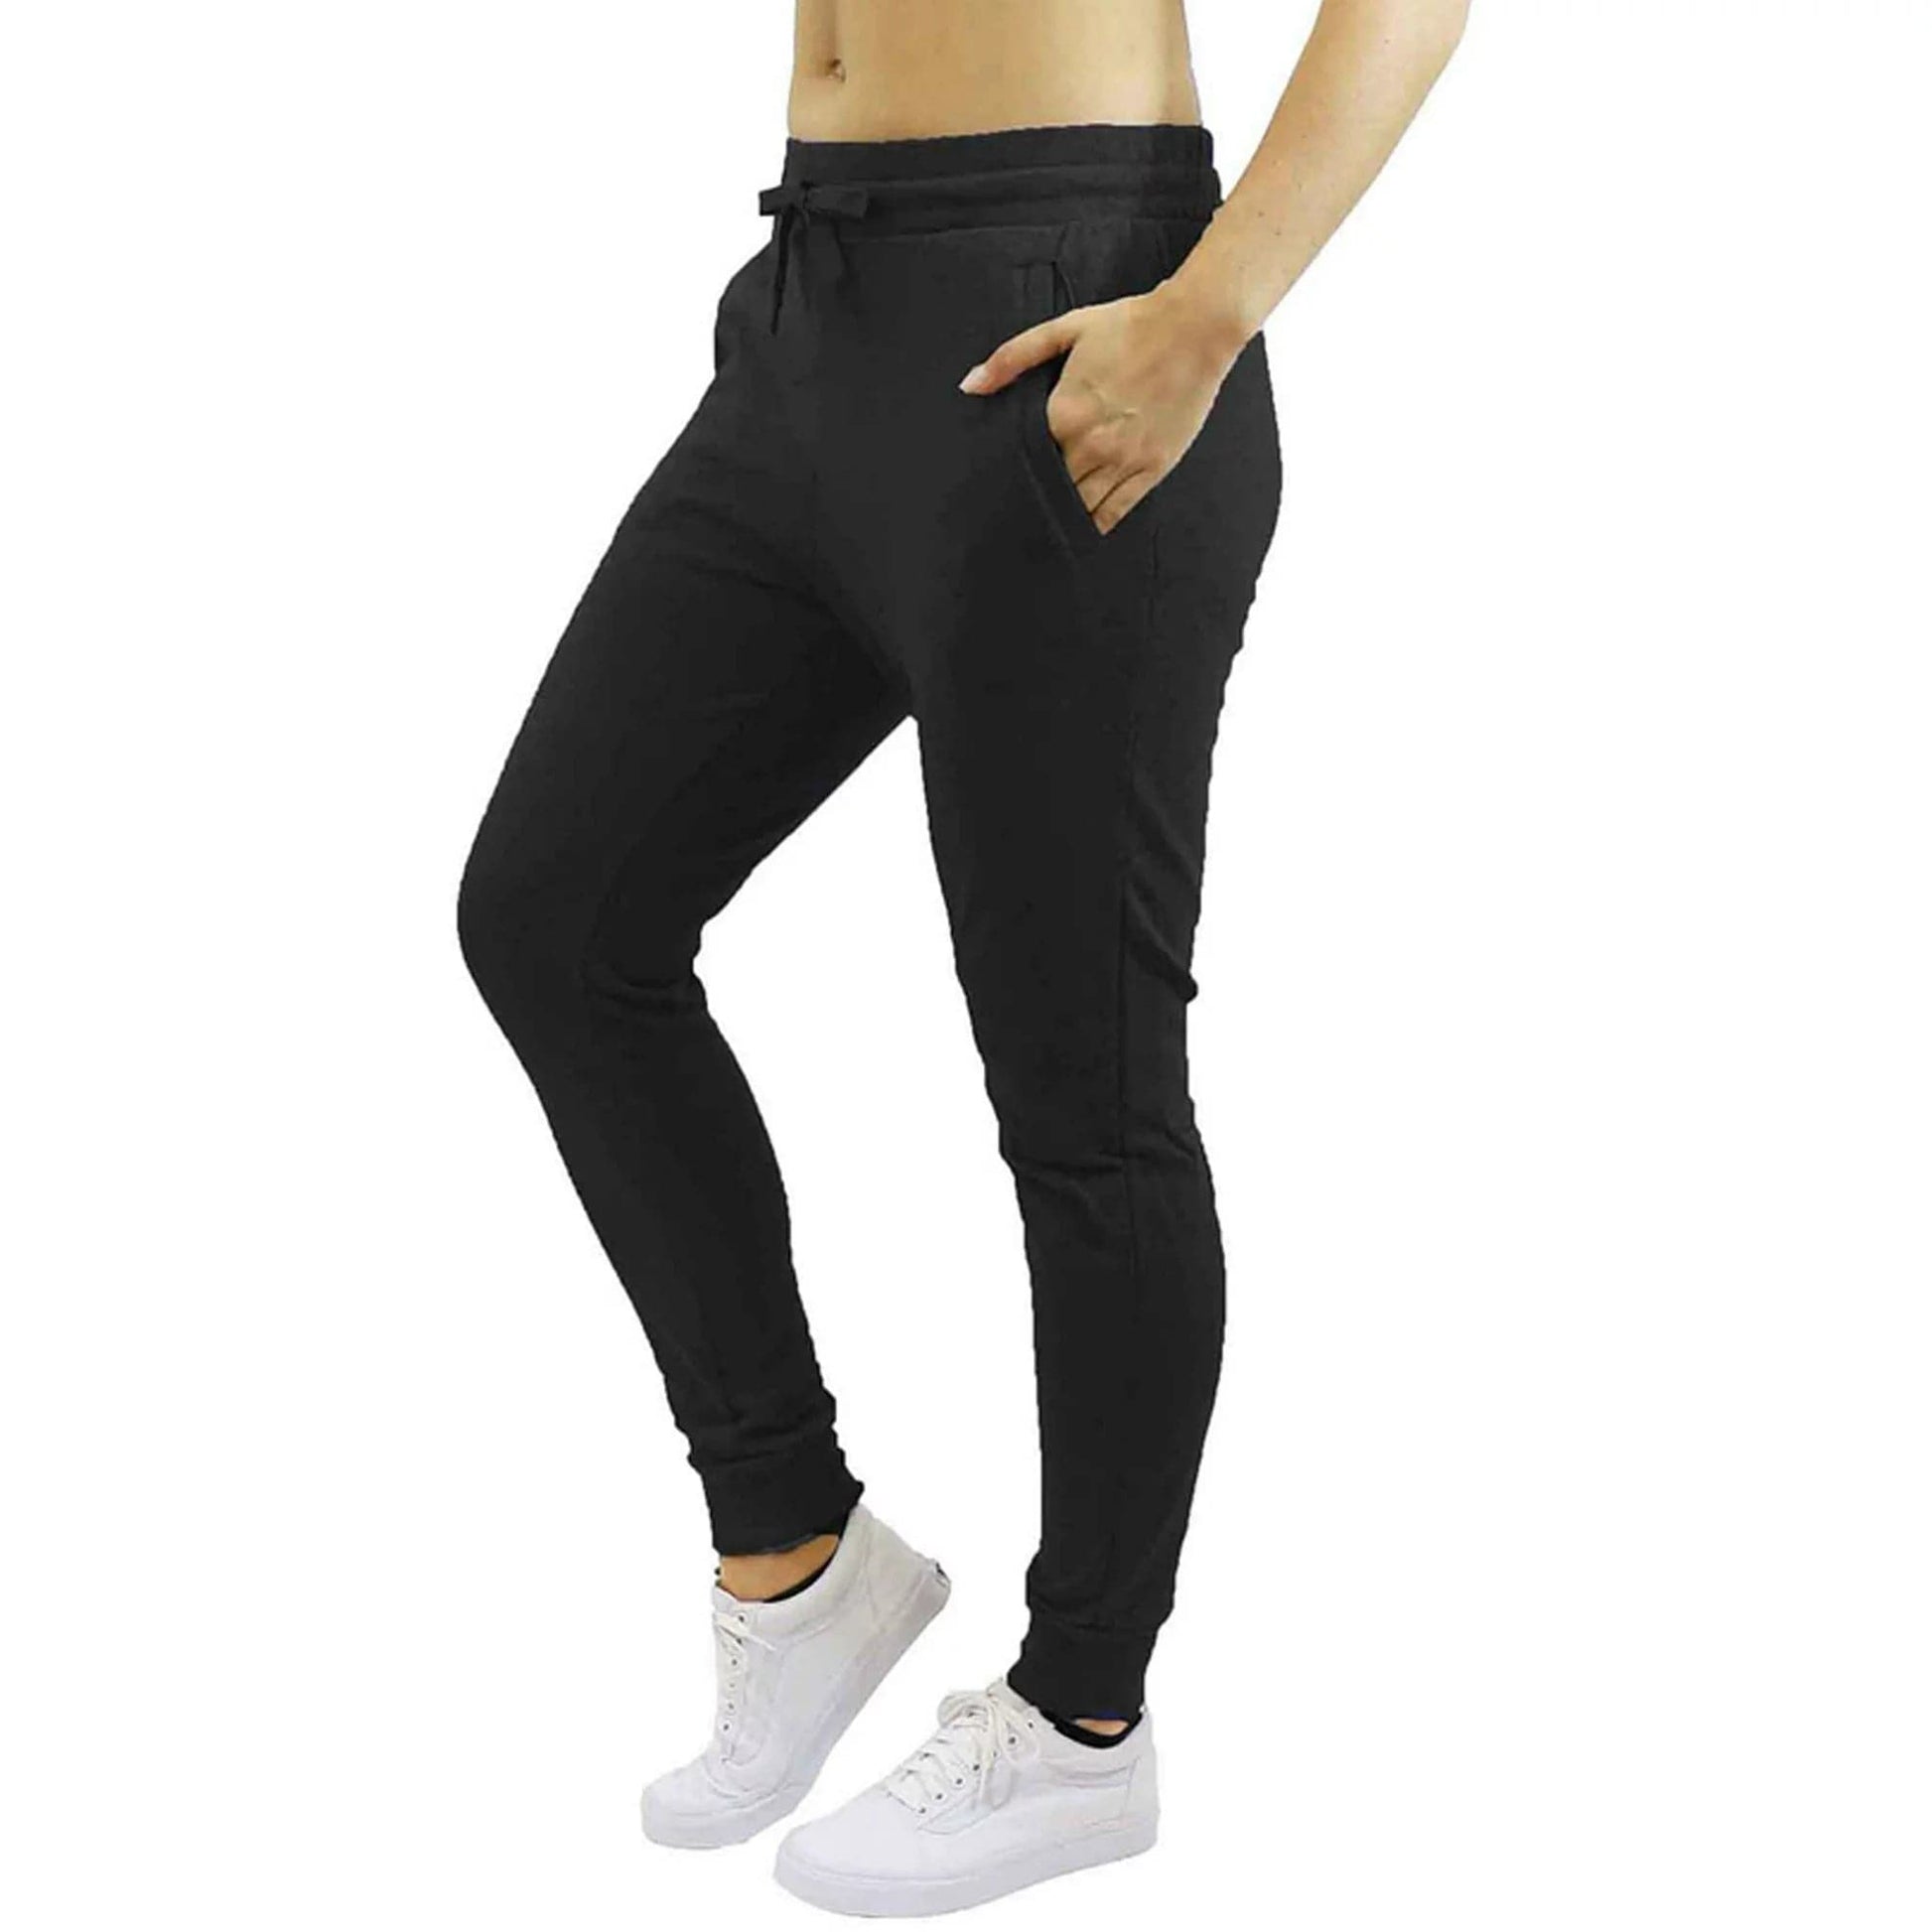 Women's modal joggers sweatpants